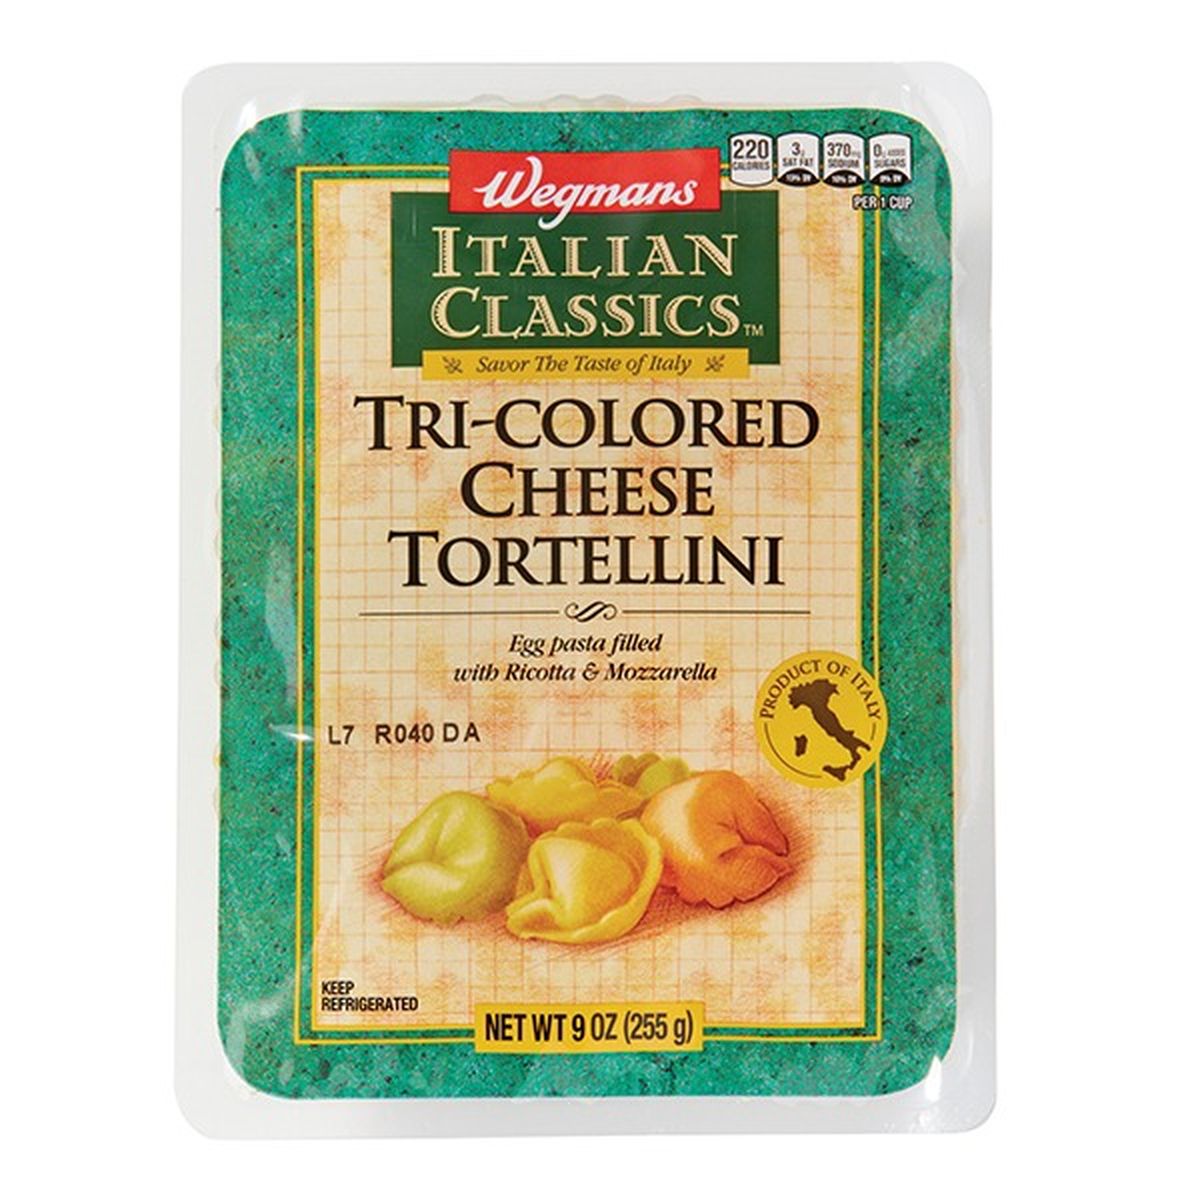 Calories in Wegmans Italian Classics Tri-Colored Cheese Tortellini